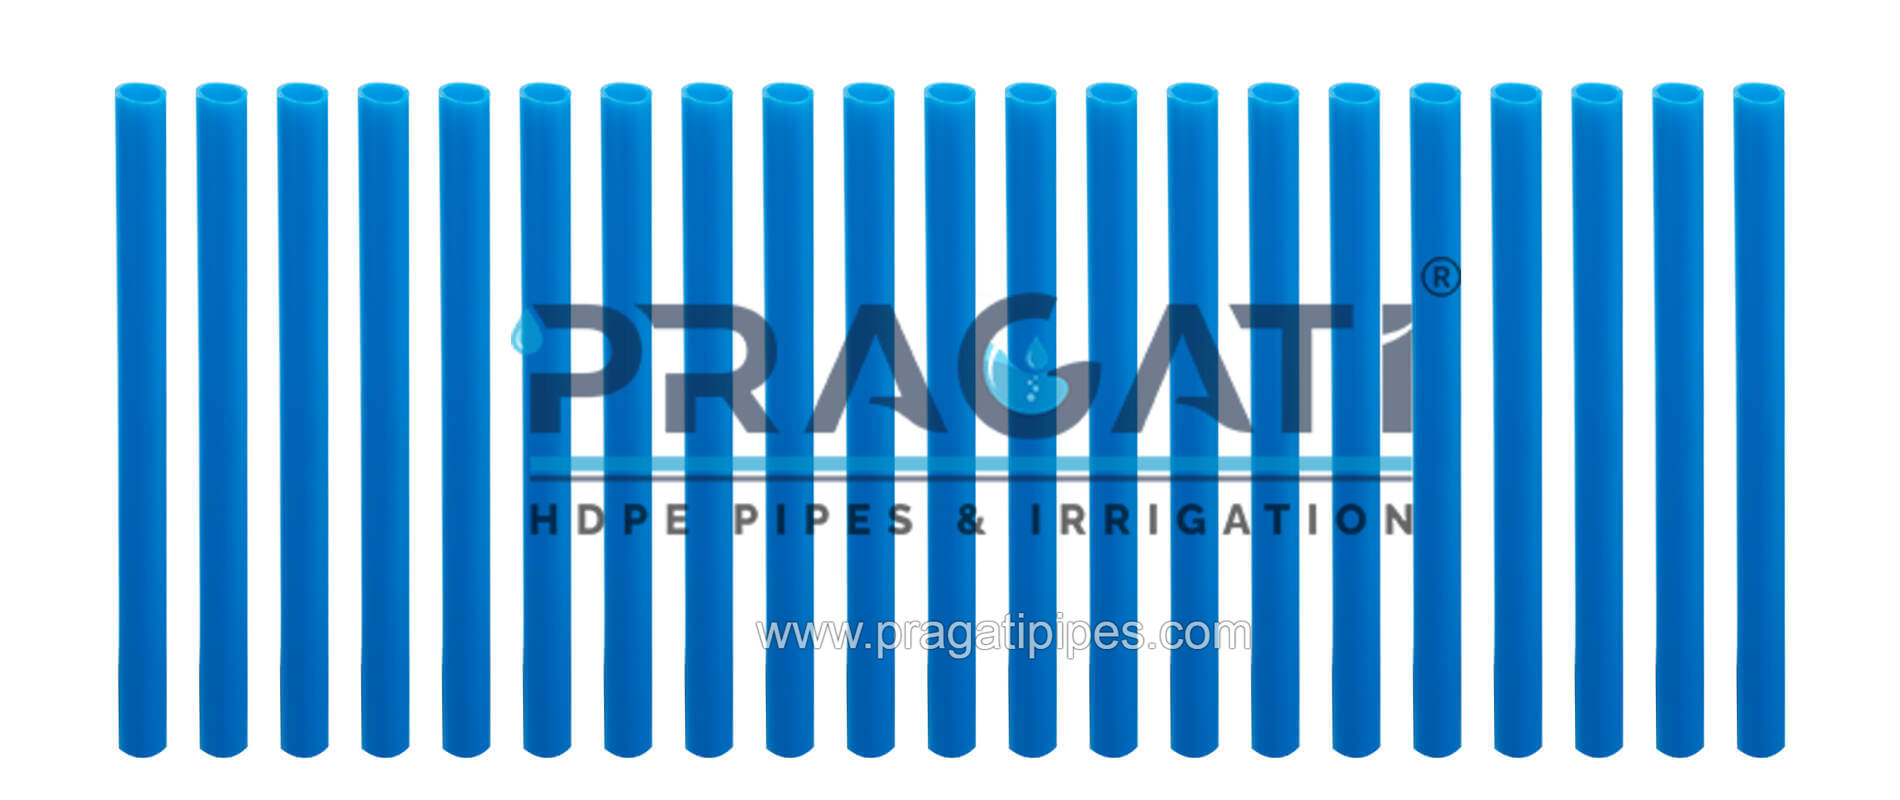 Pragati Pipe Industries